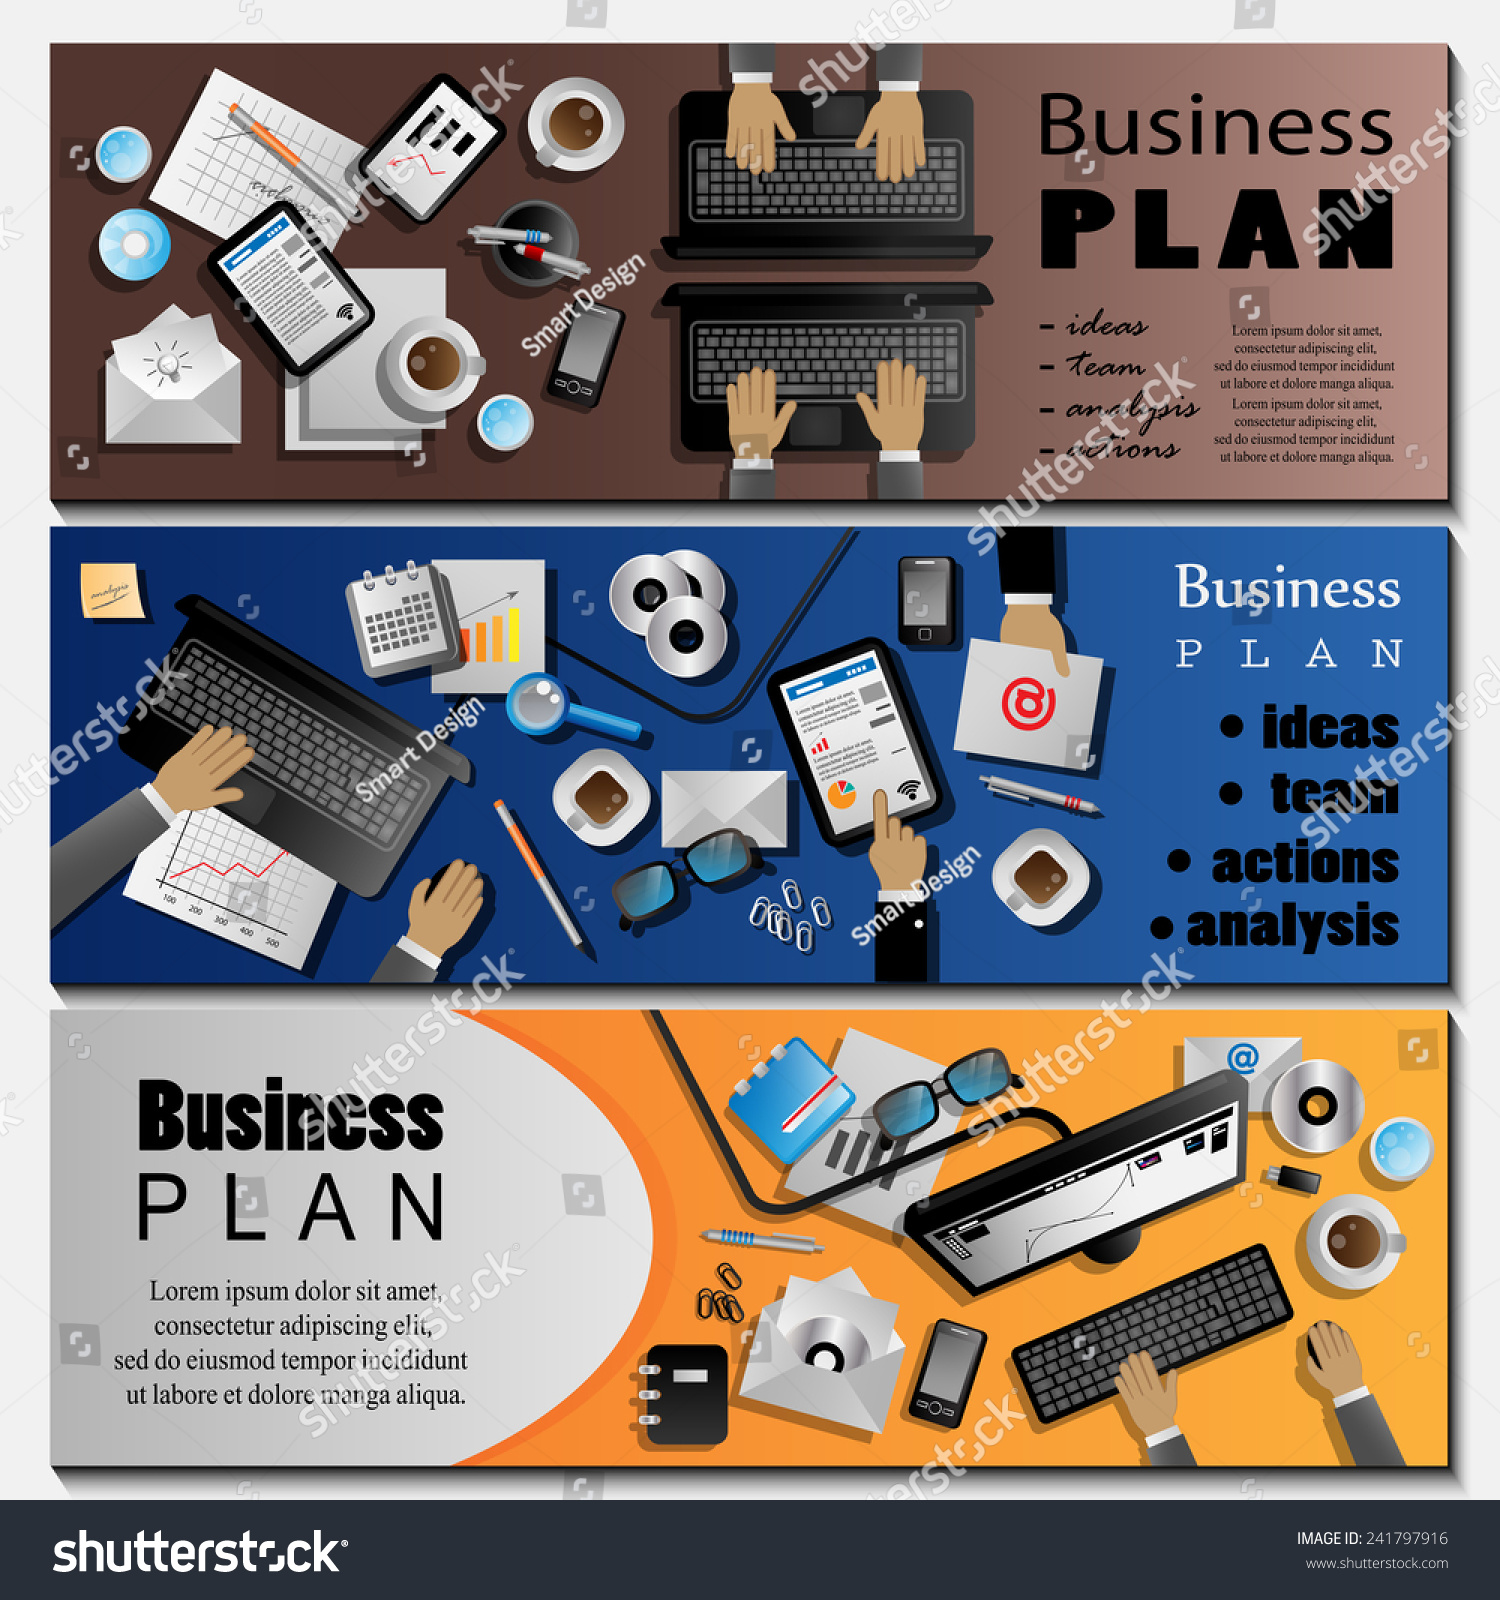 Business plan graphic design sample